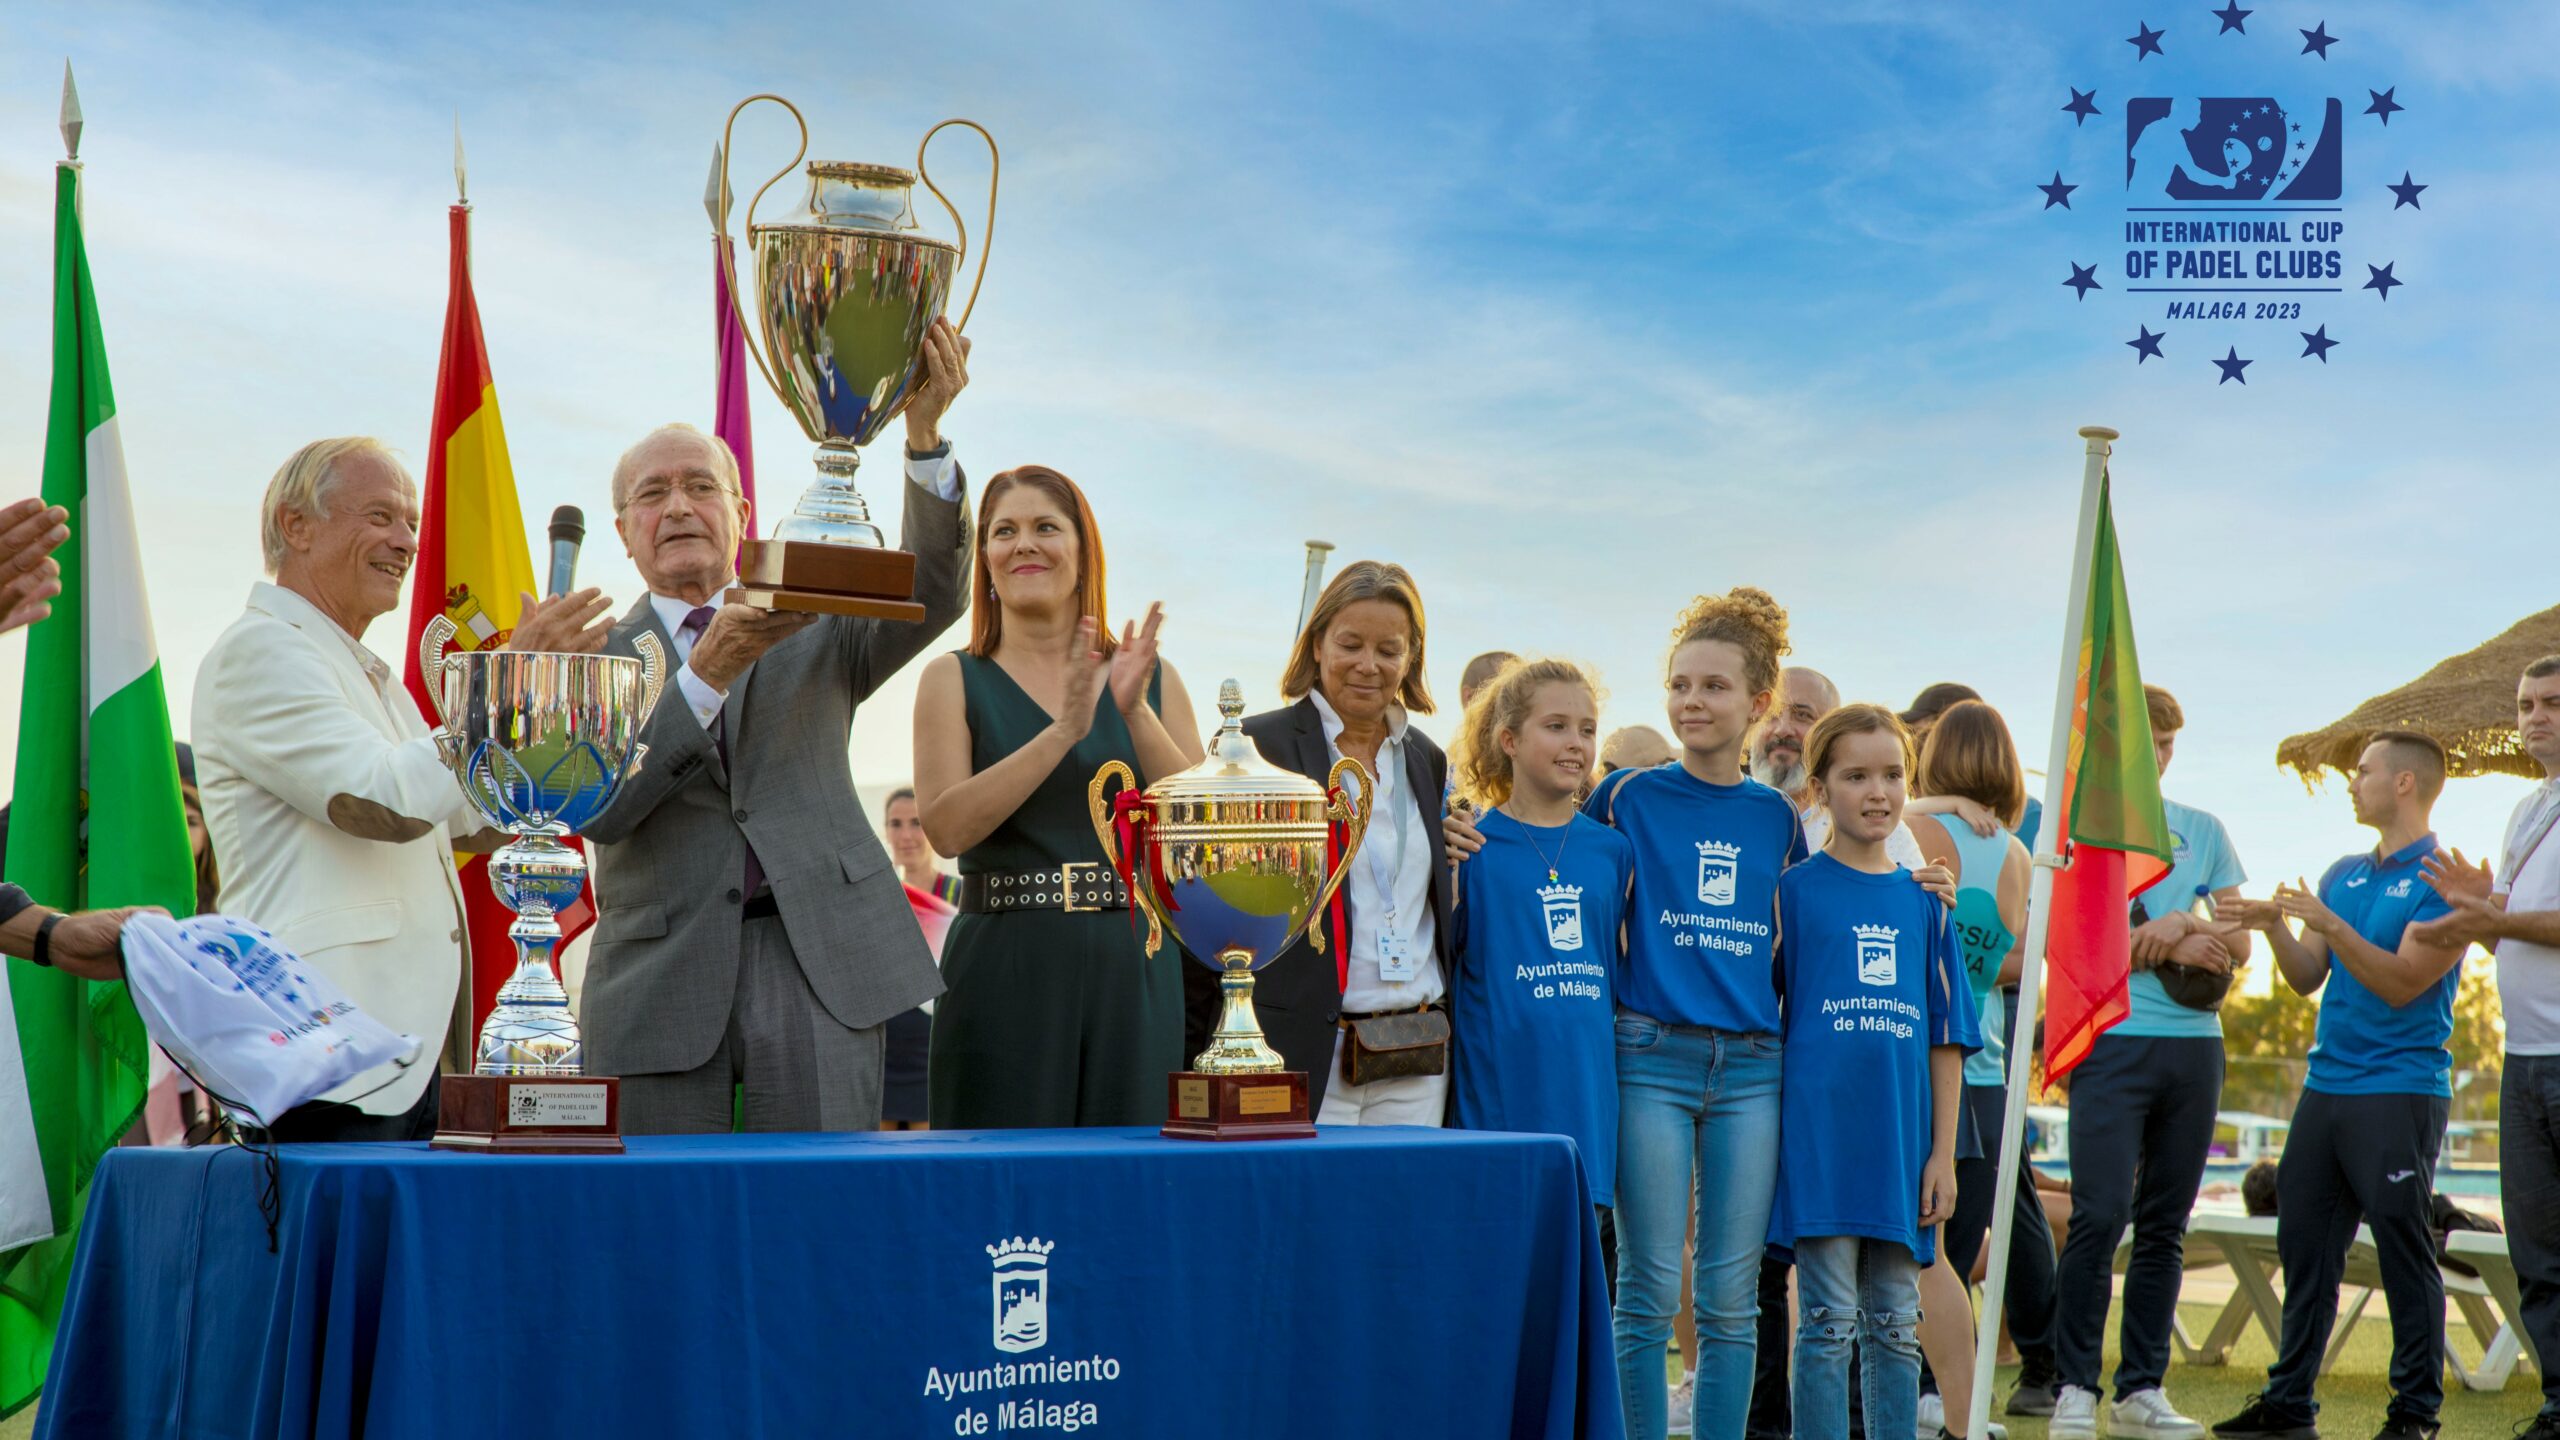 international cup of padel clubs Malaga